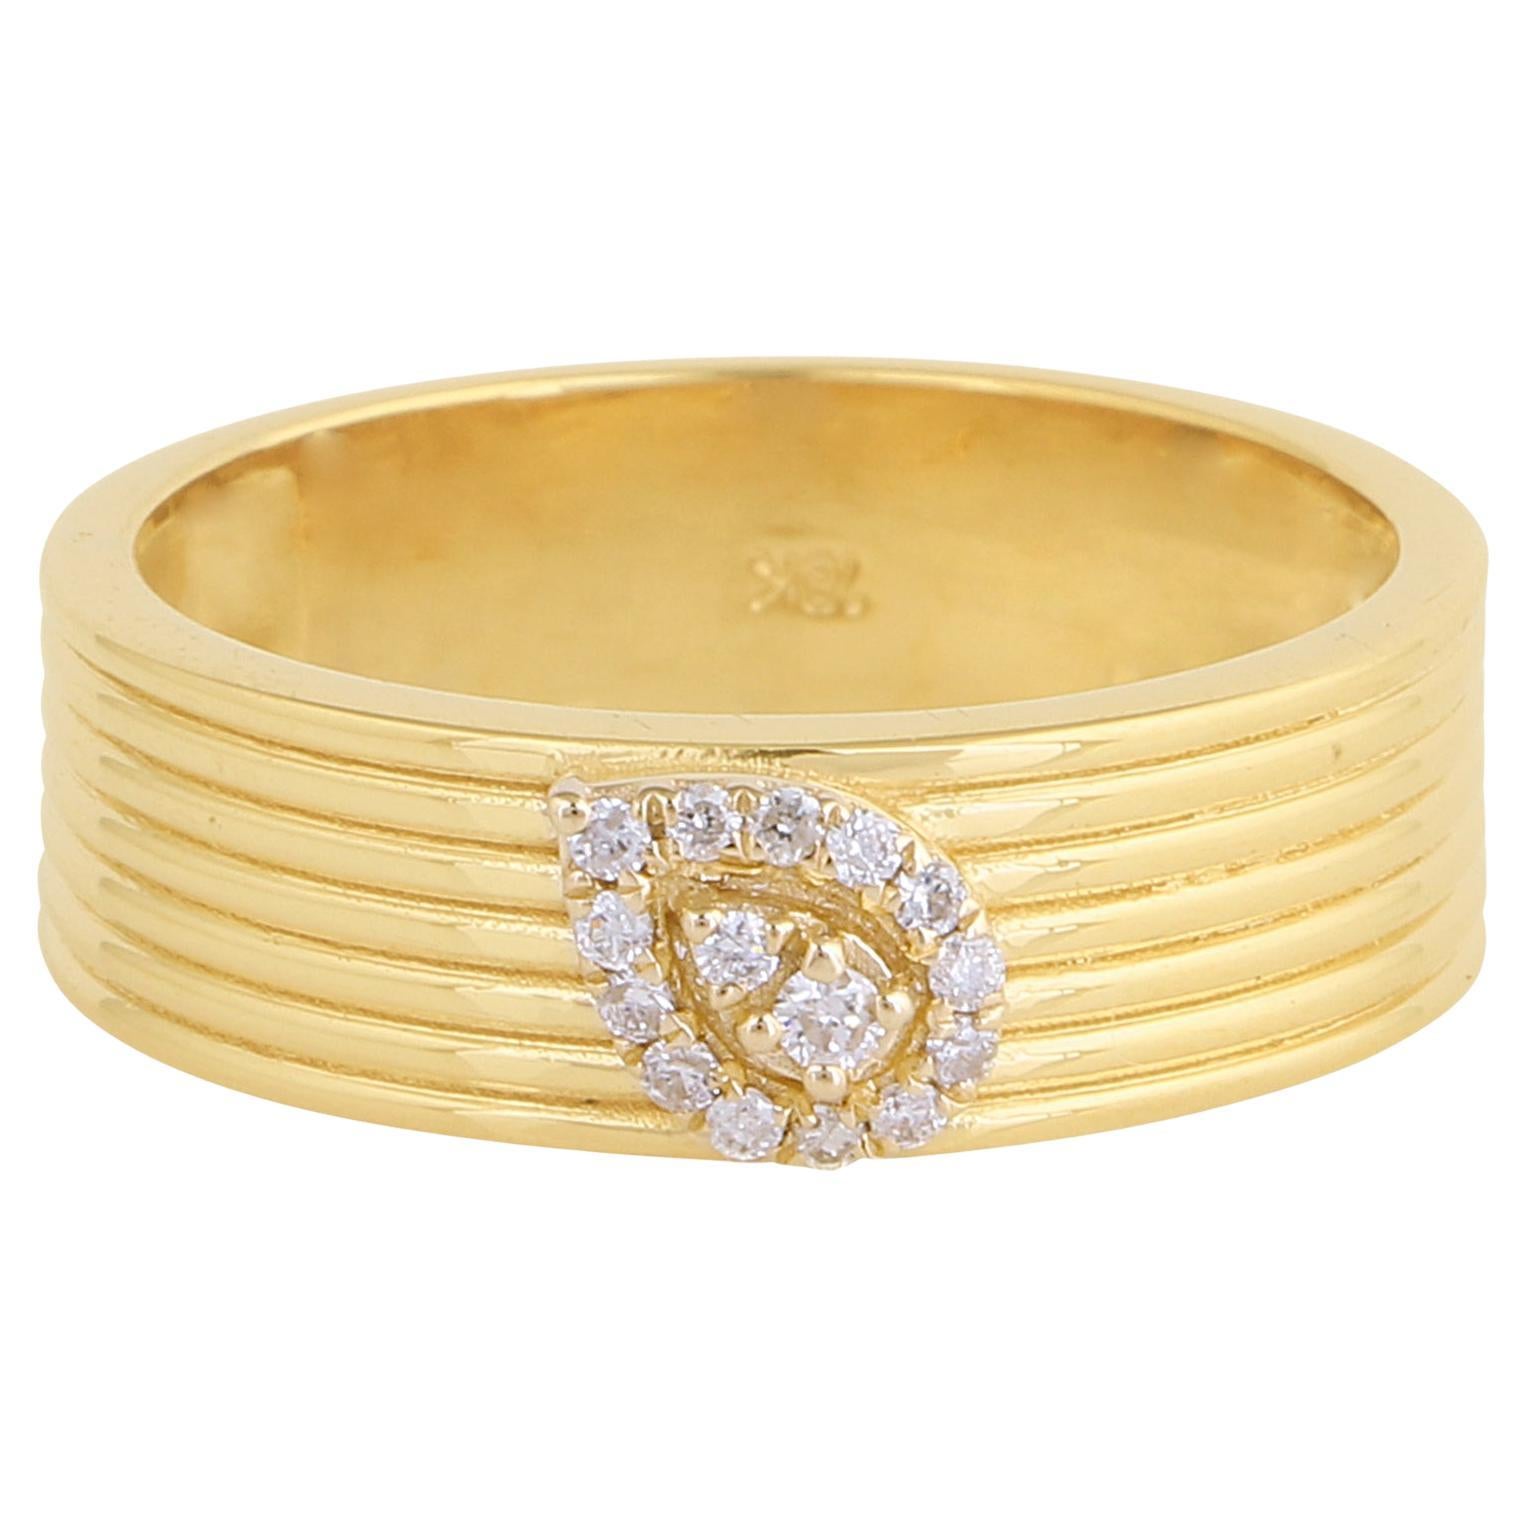 SI Clarity HI Color Diamond Pave Band Ring 18 Karat Yellow Gold Handmade Jewelry